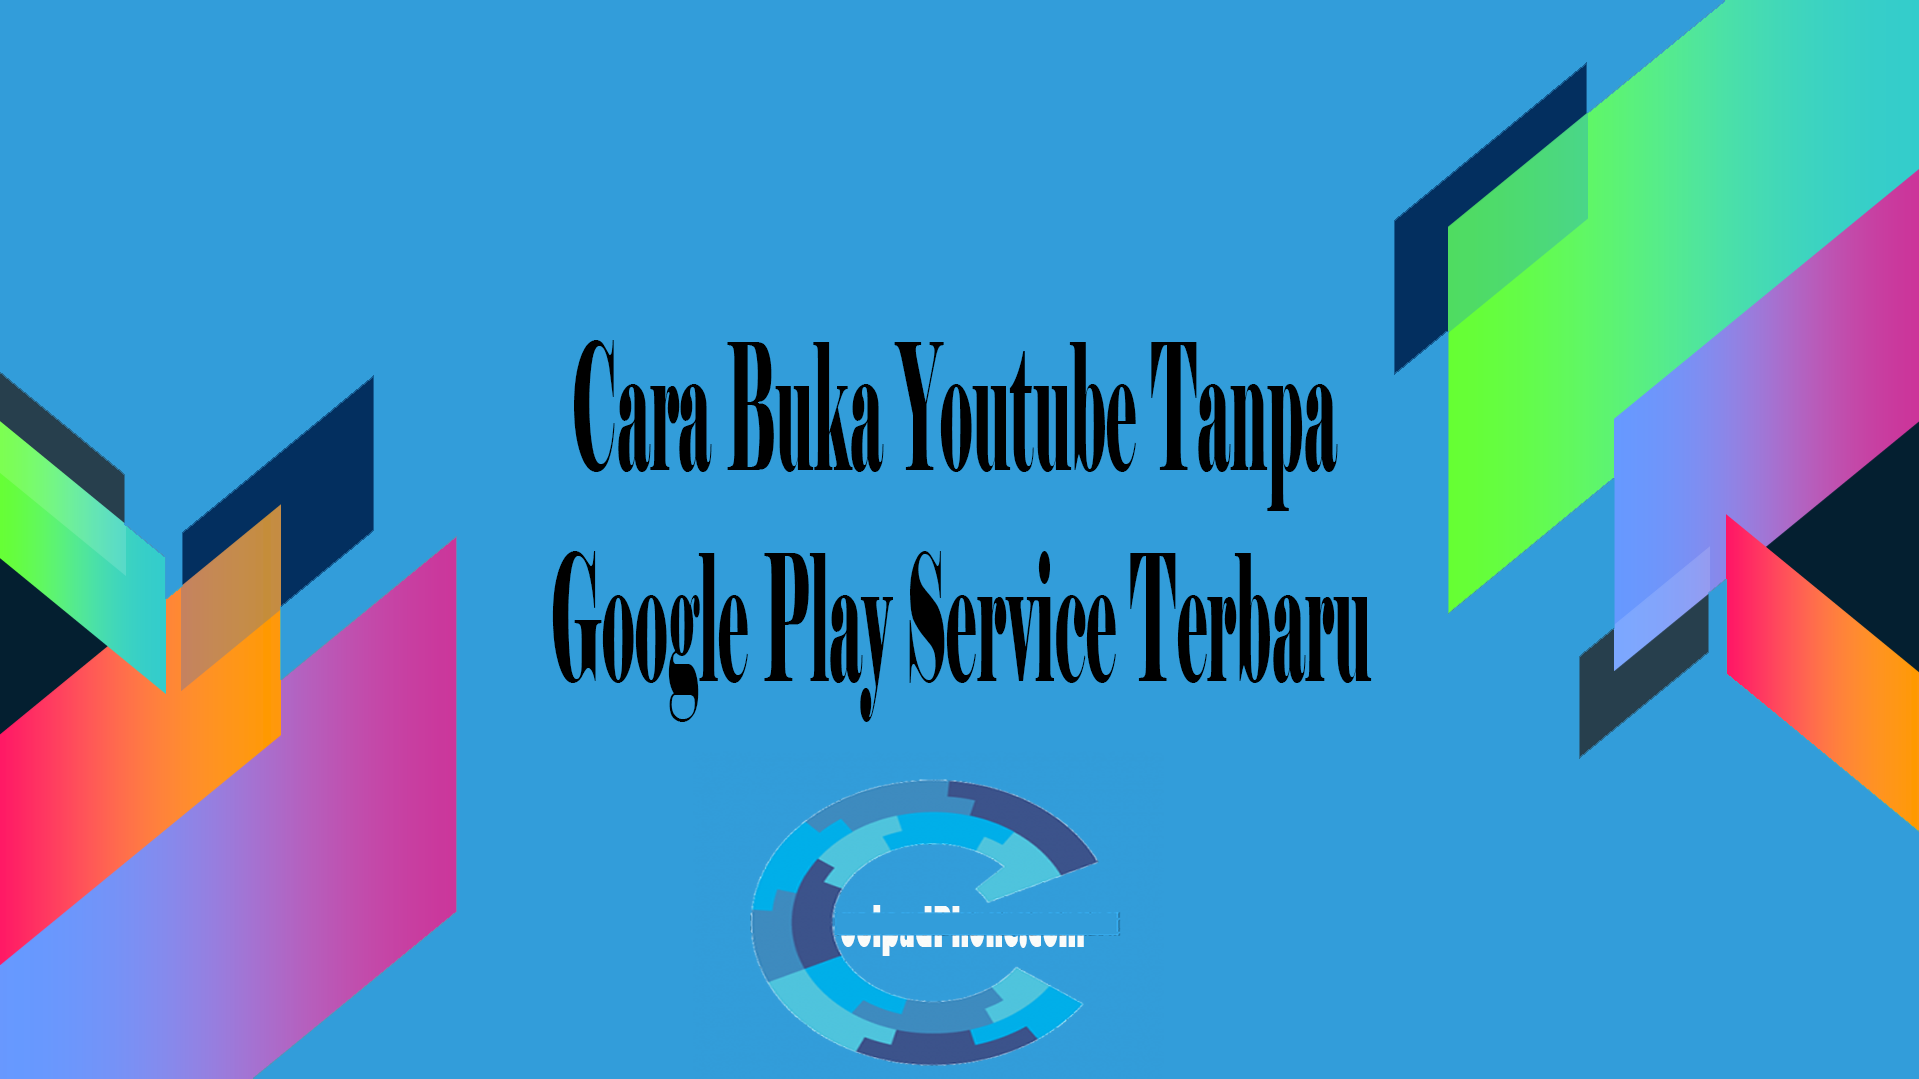 Cara Buka Youtube Tanpa Google Play Service Terbaru